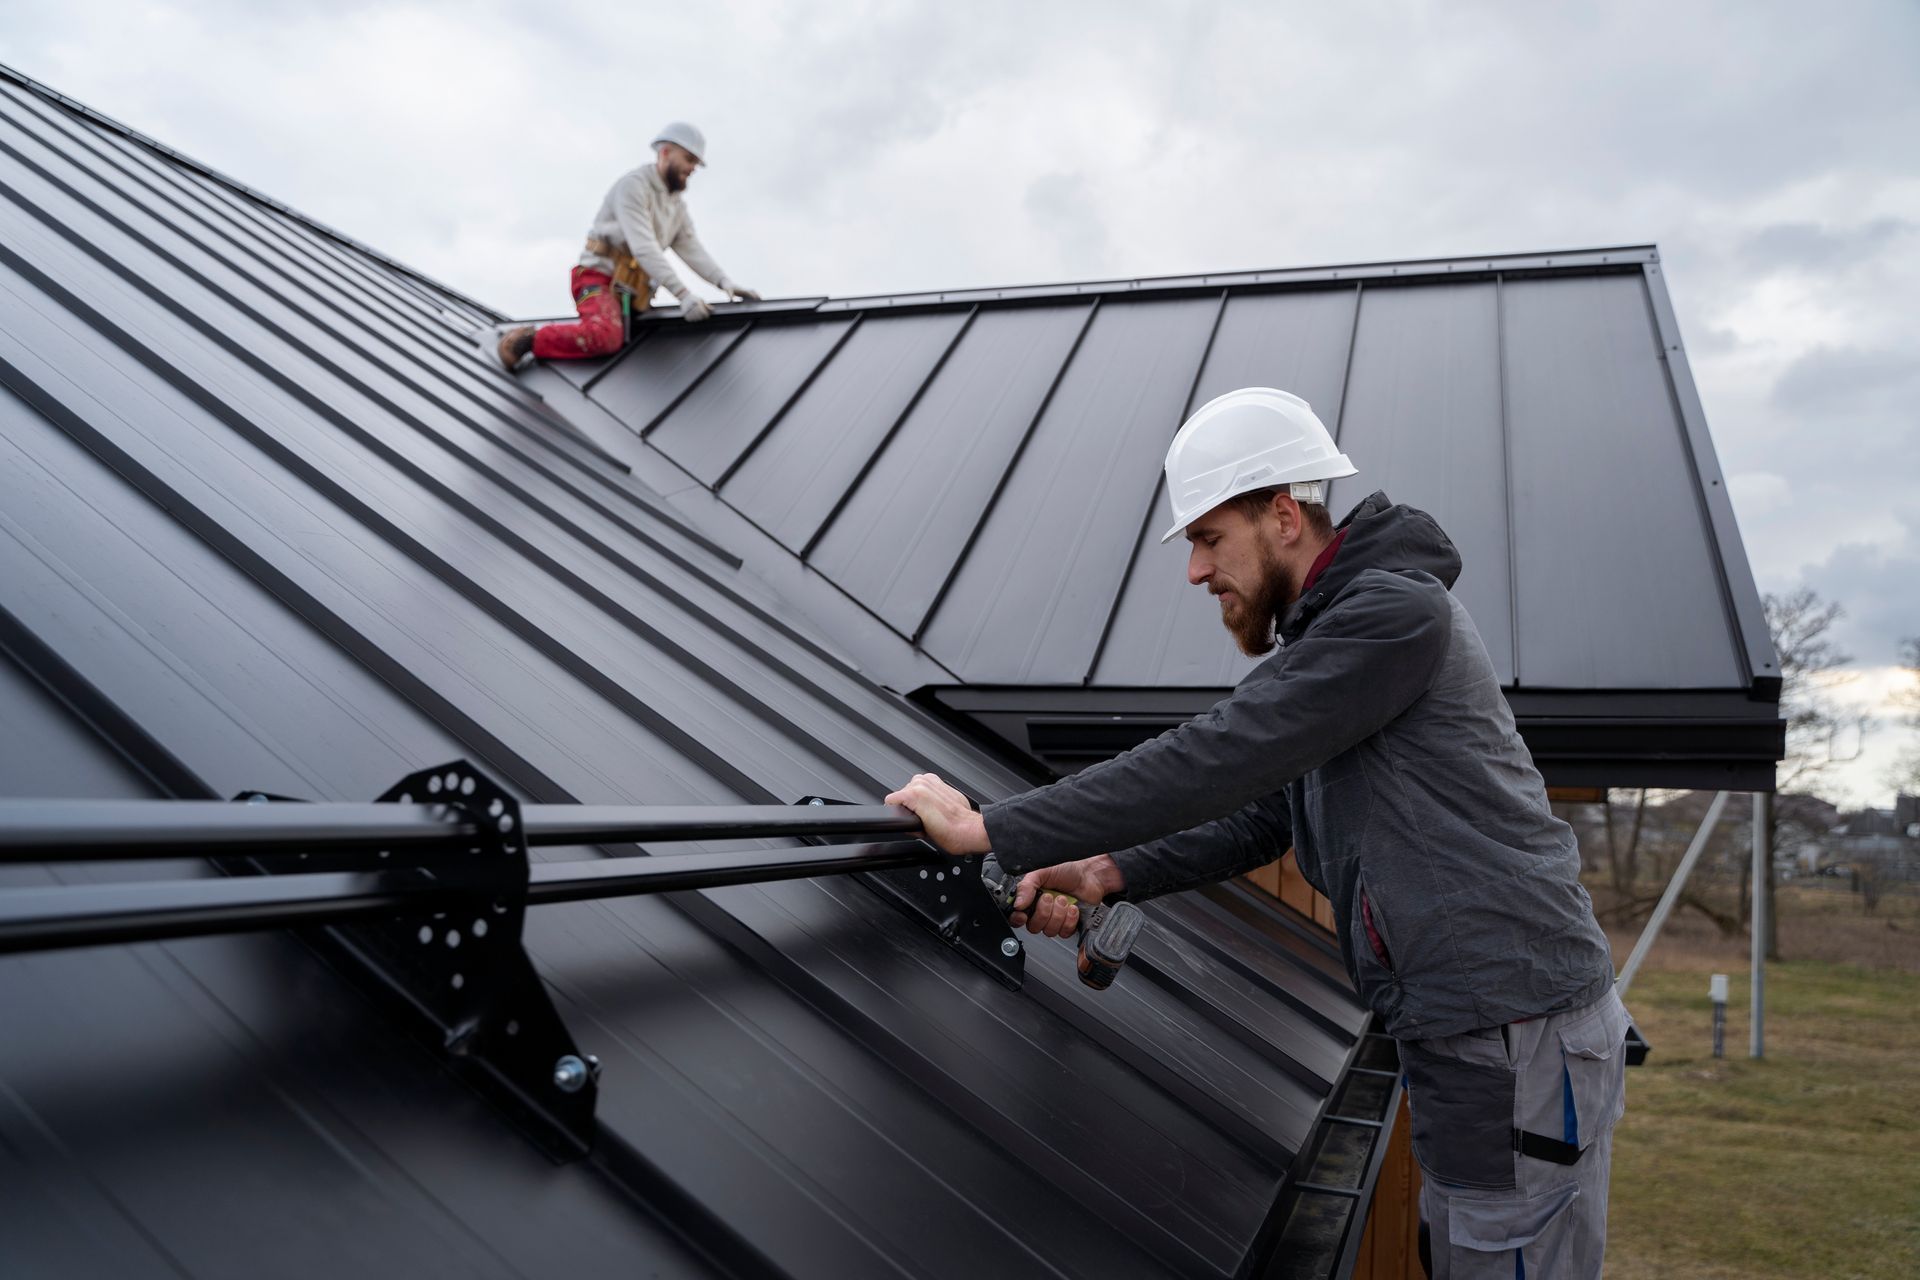 Men working on roof together